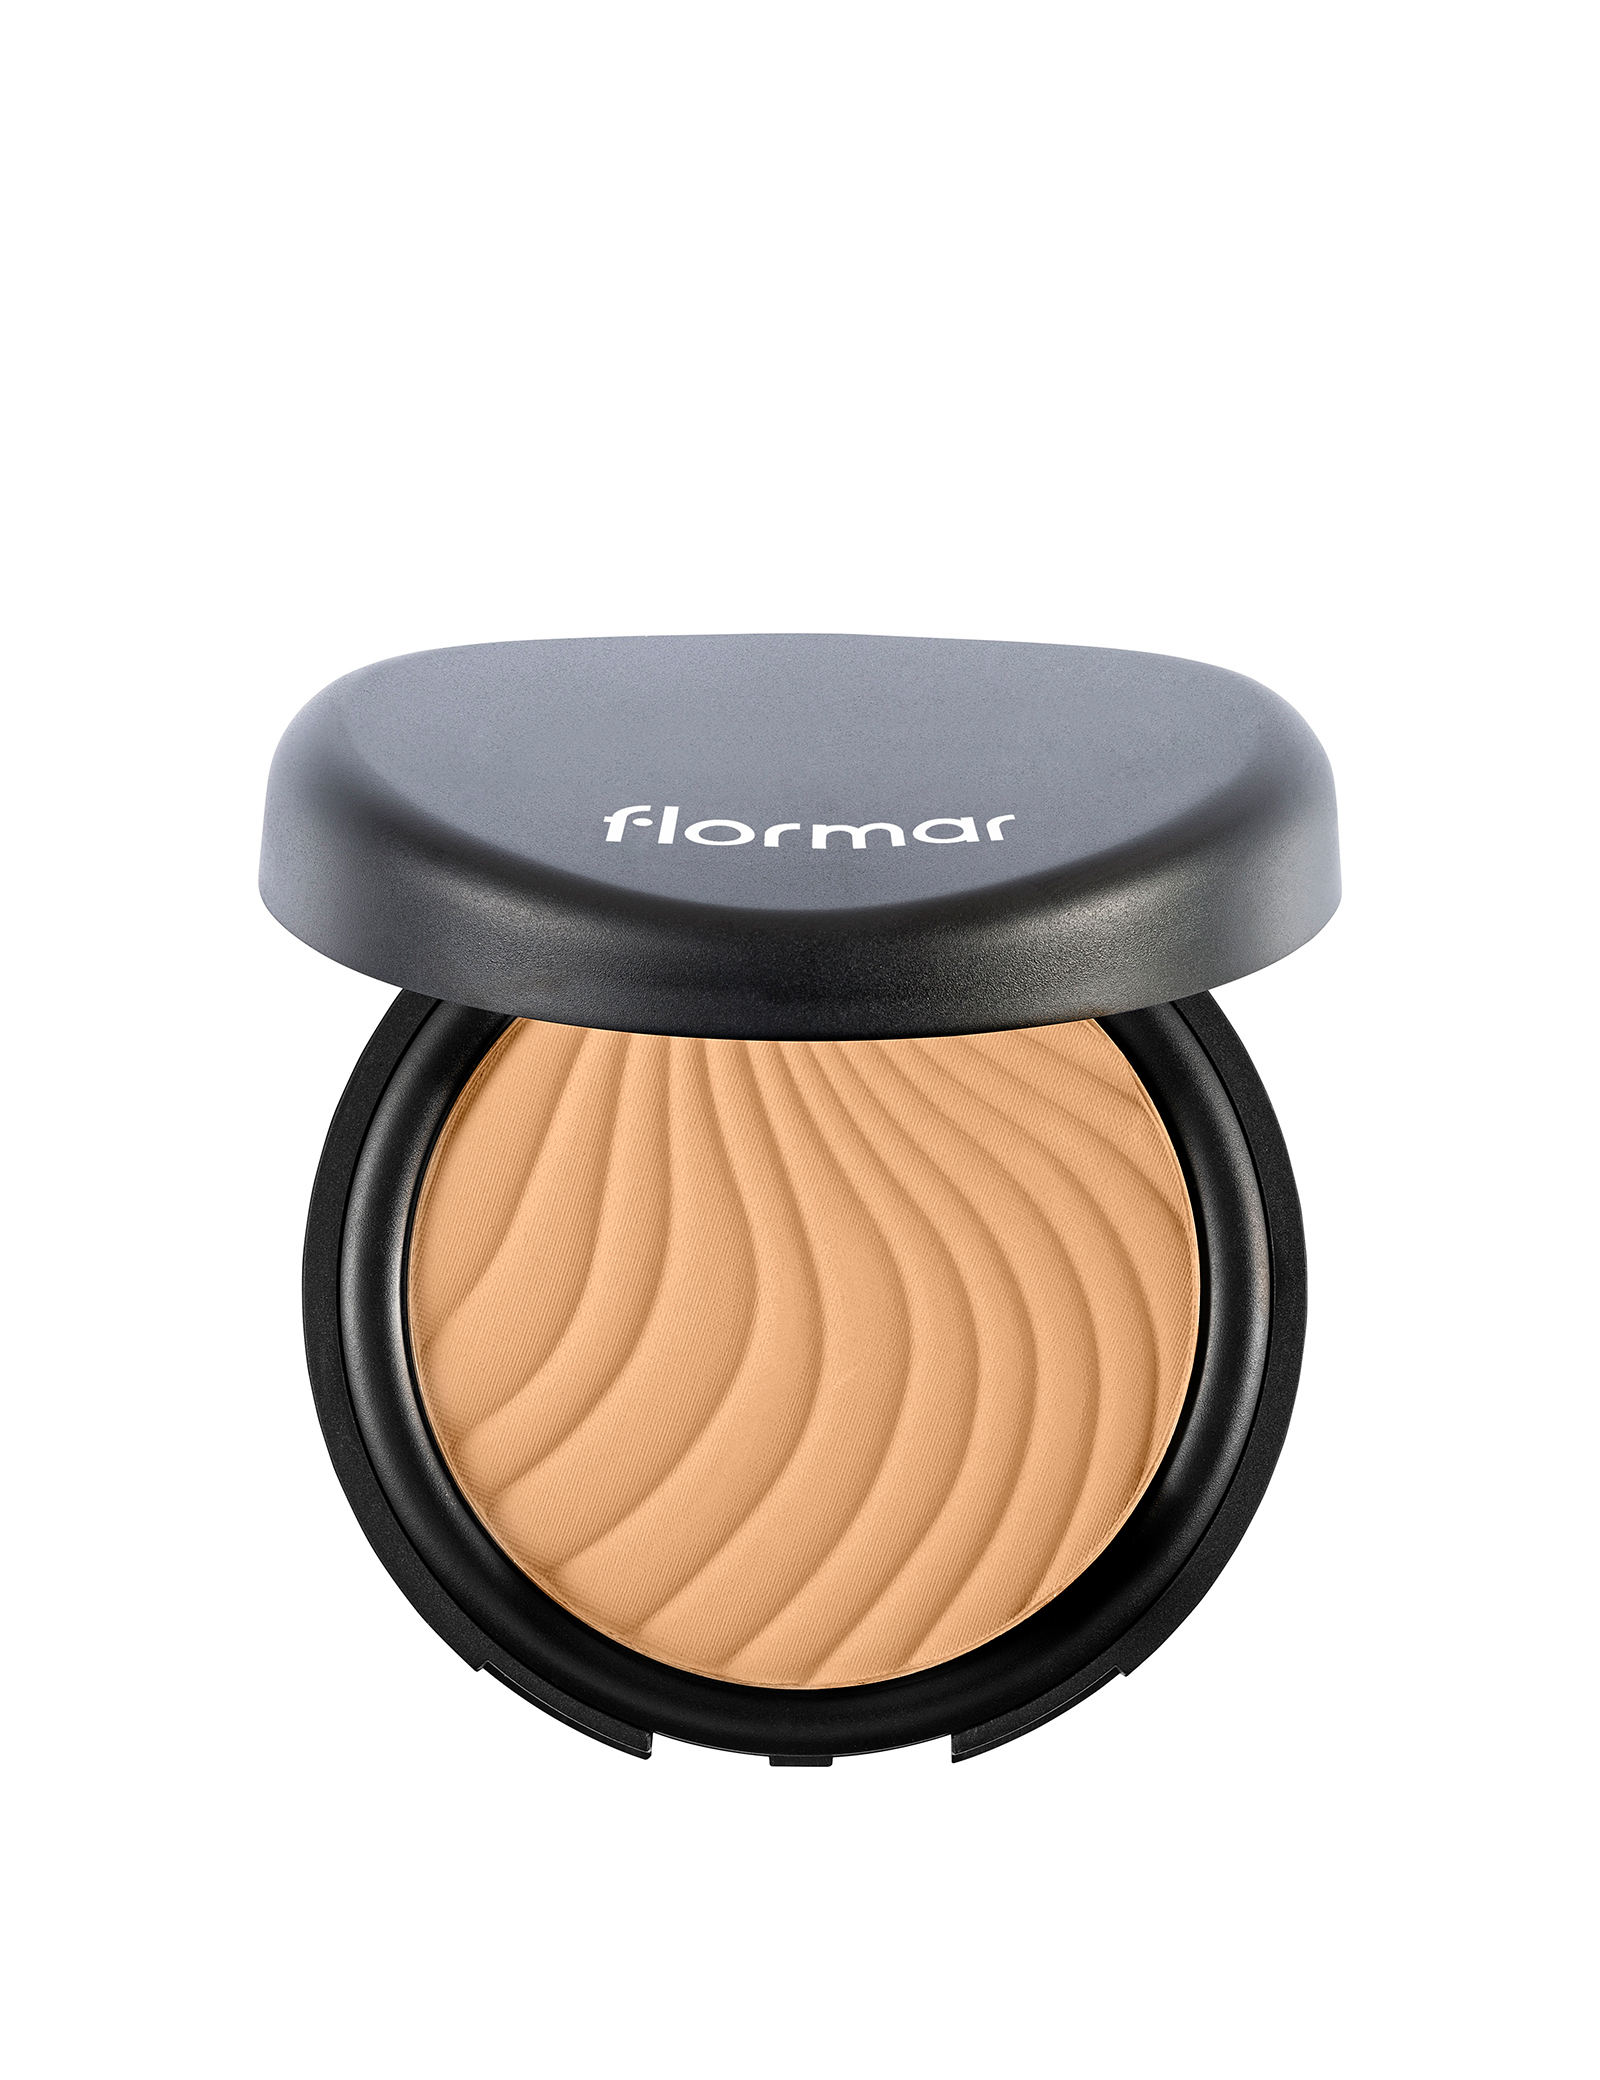 Flormar Wet & Dry Compact Powder W09 Honey